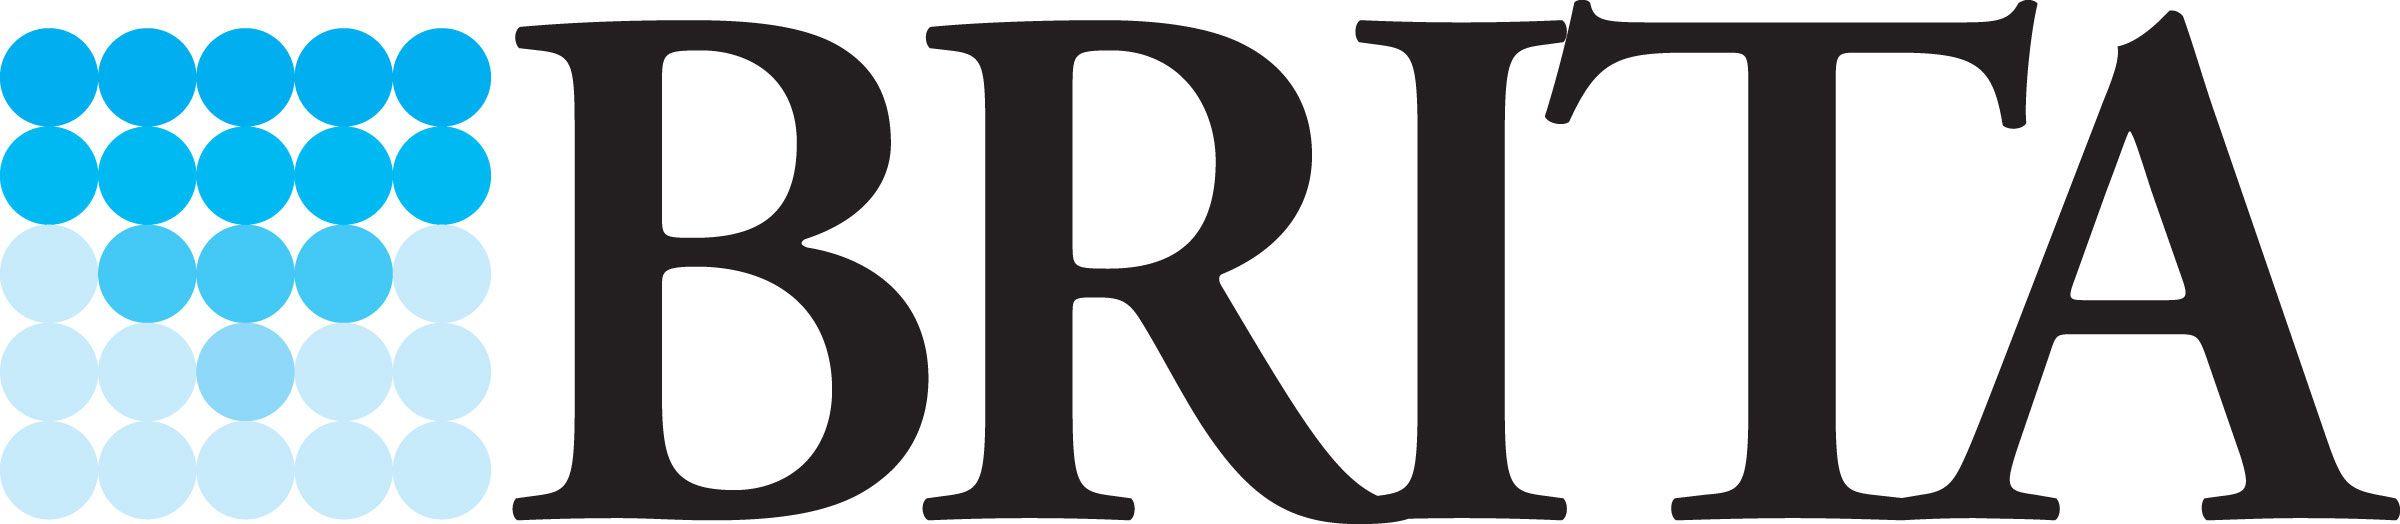 Britta Logo - Brita Logos